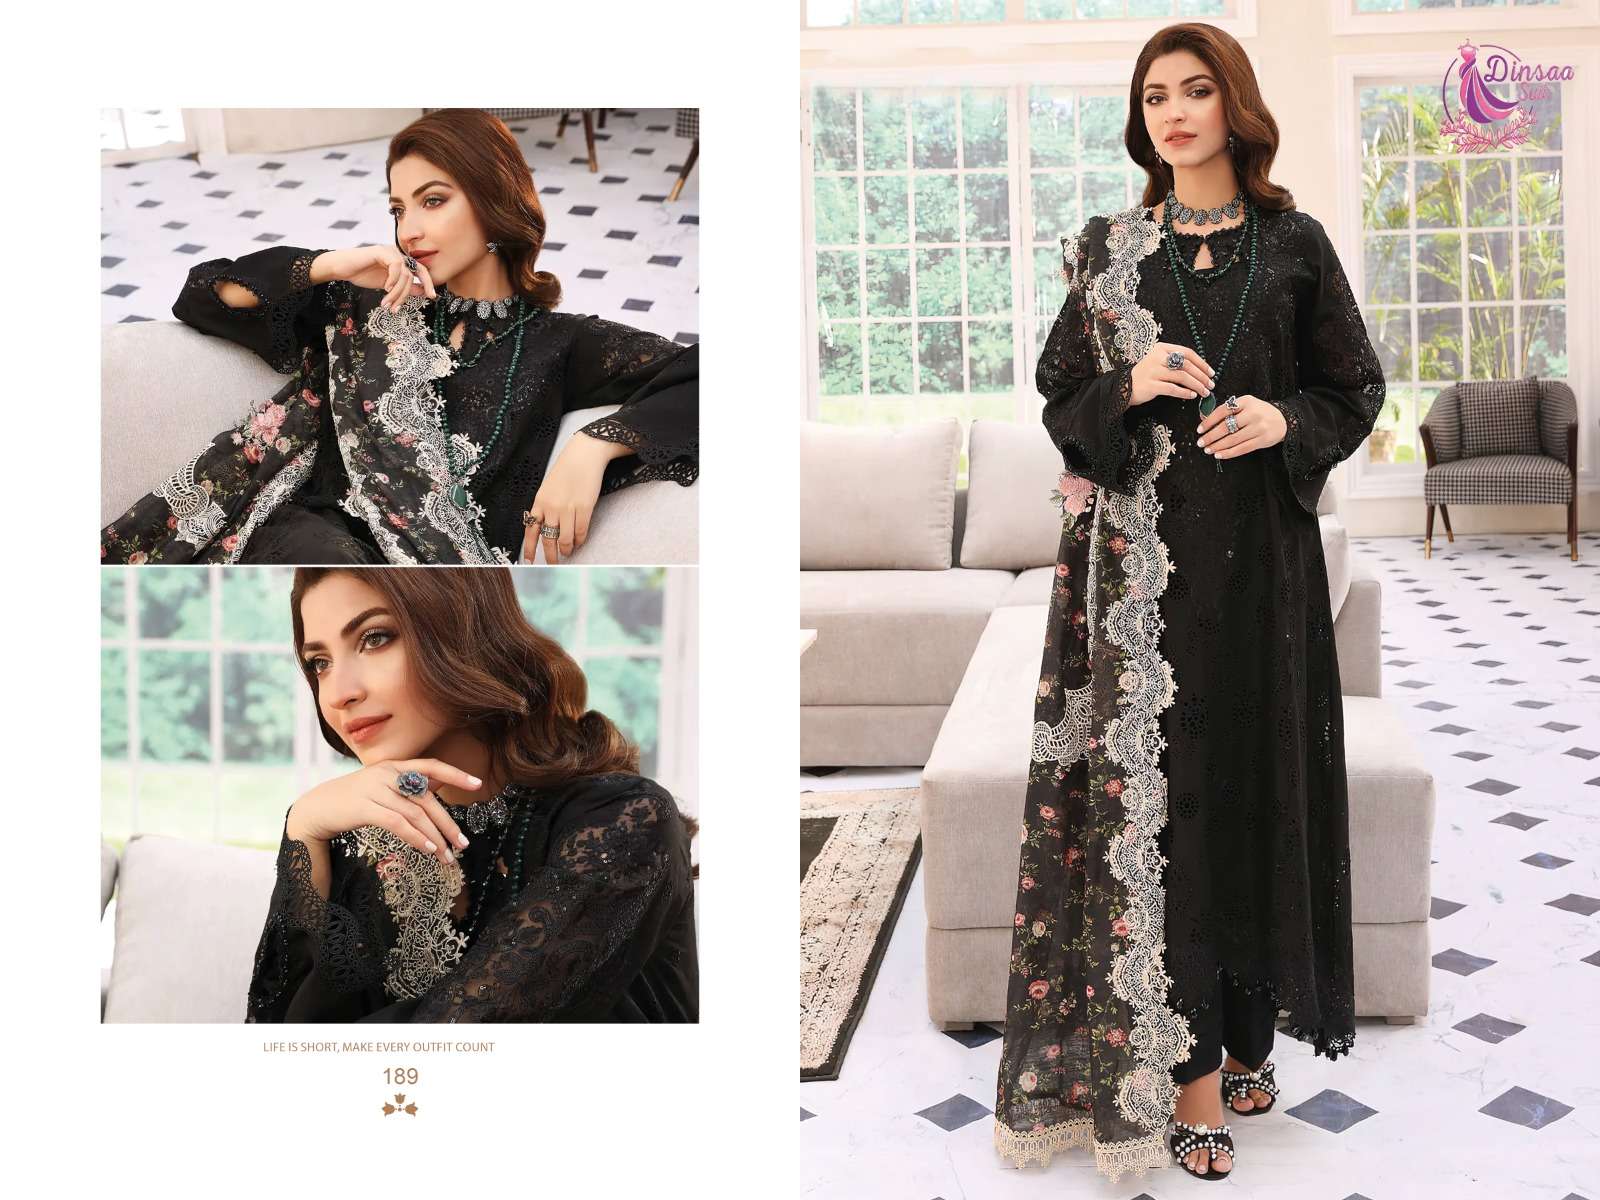 Dinsaa Elaf Super Summer Collection Vol 3 Nx Pakistani Suits Wholesale catalog